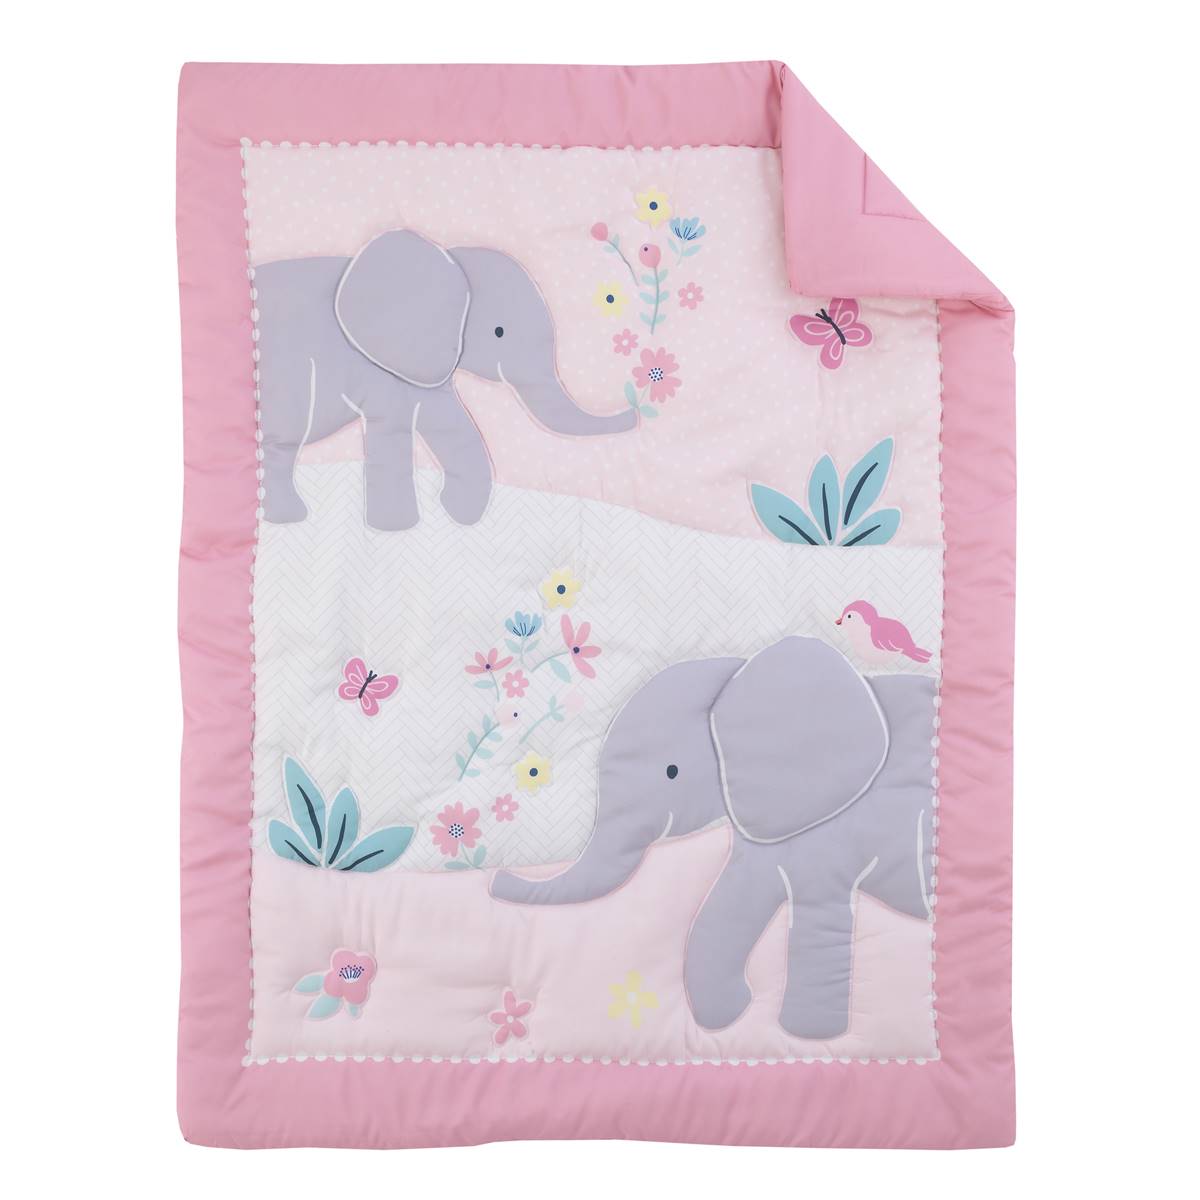 Carters(R) 3pc. Floral Elephant Nursery Crib Bedding Set